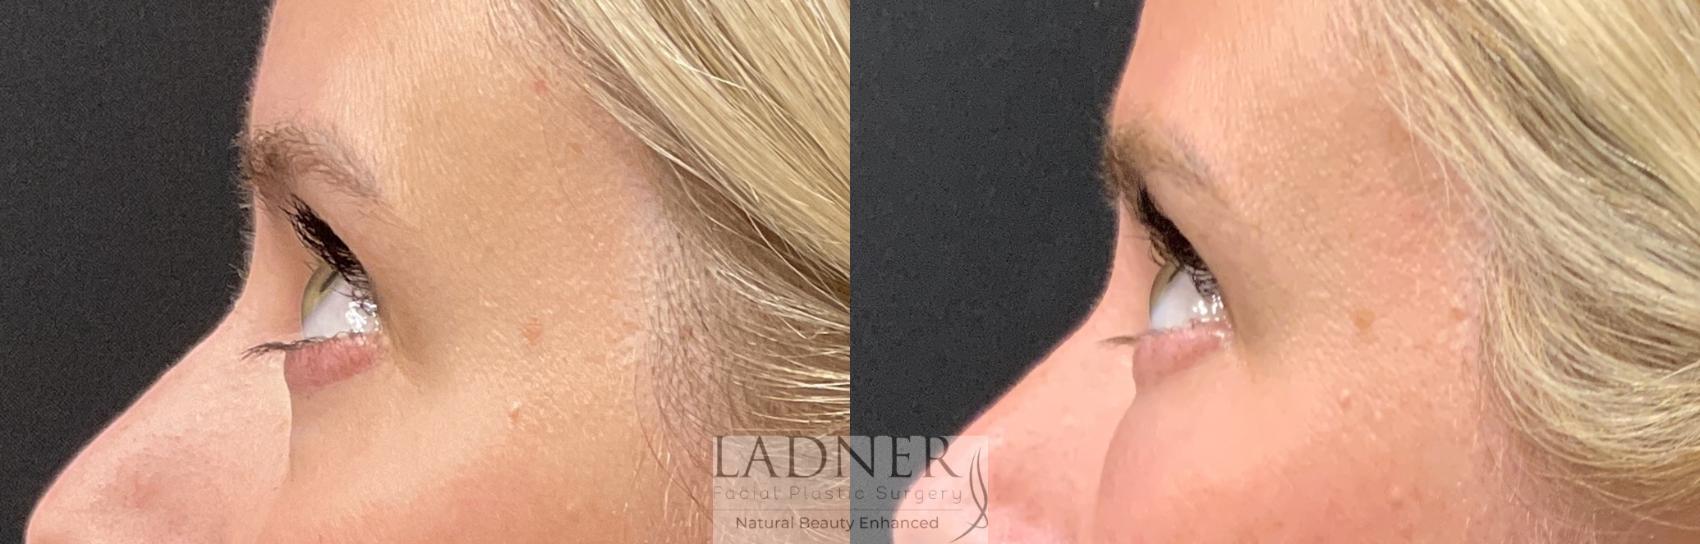 Facial Fat Transfer Case 237 Before & After Left Side | Denver, CO | Ladner Facial Plastic Surgery